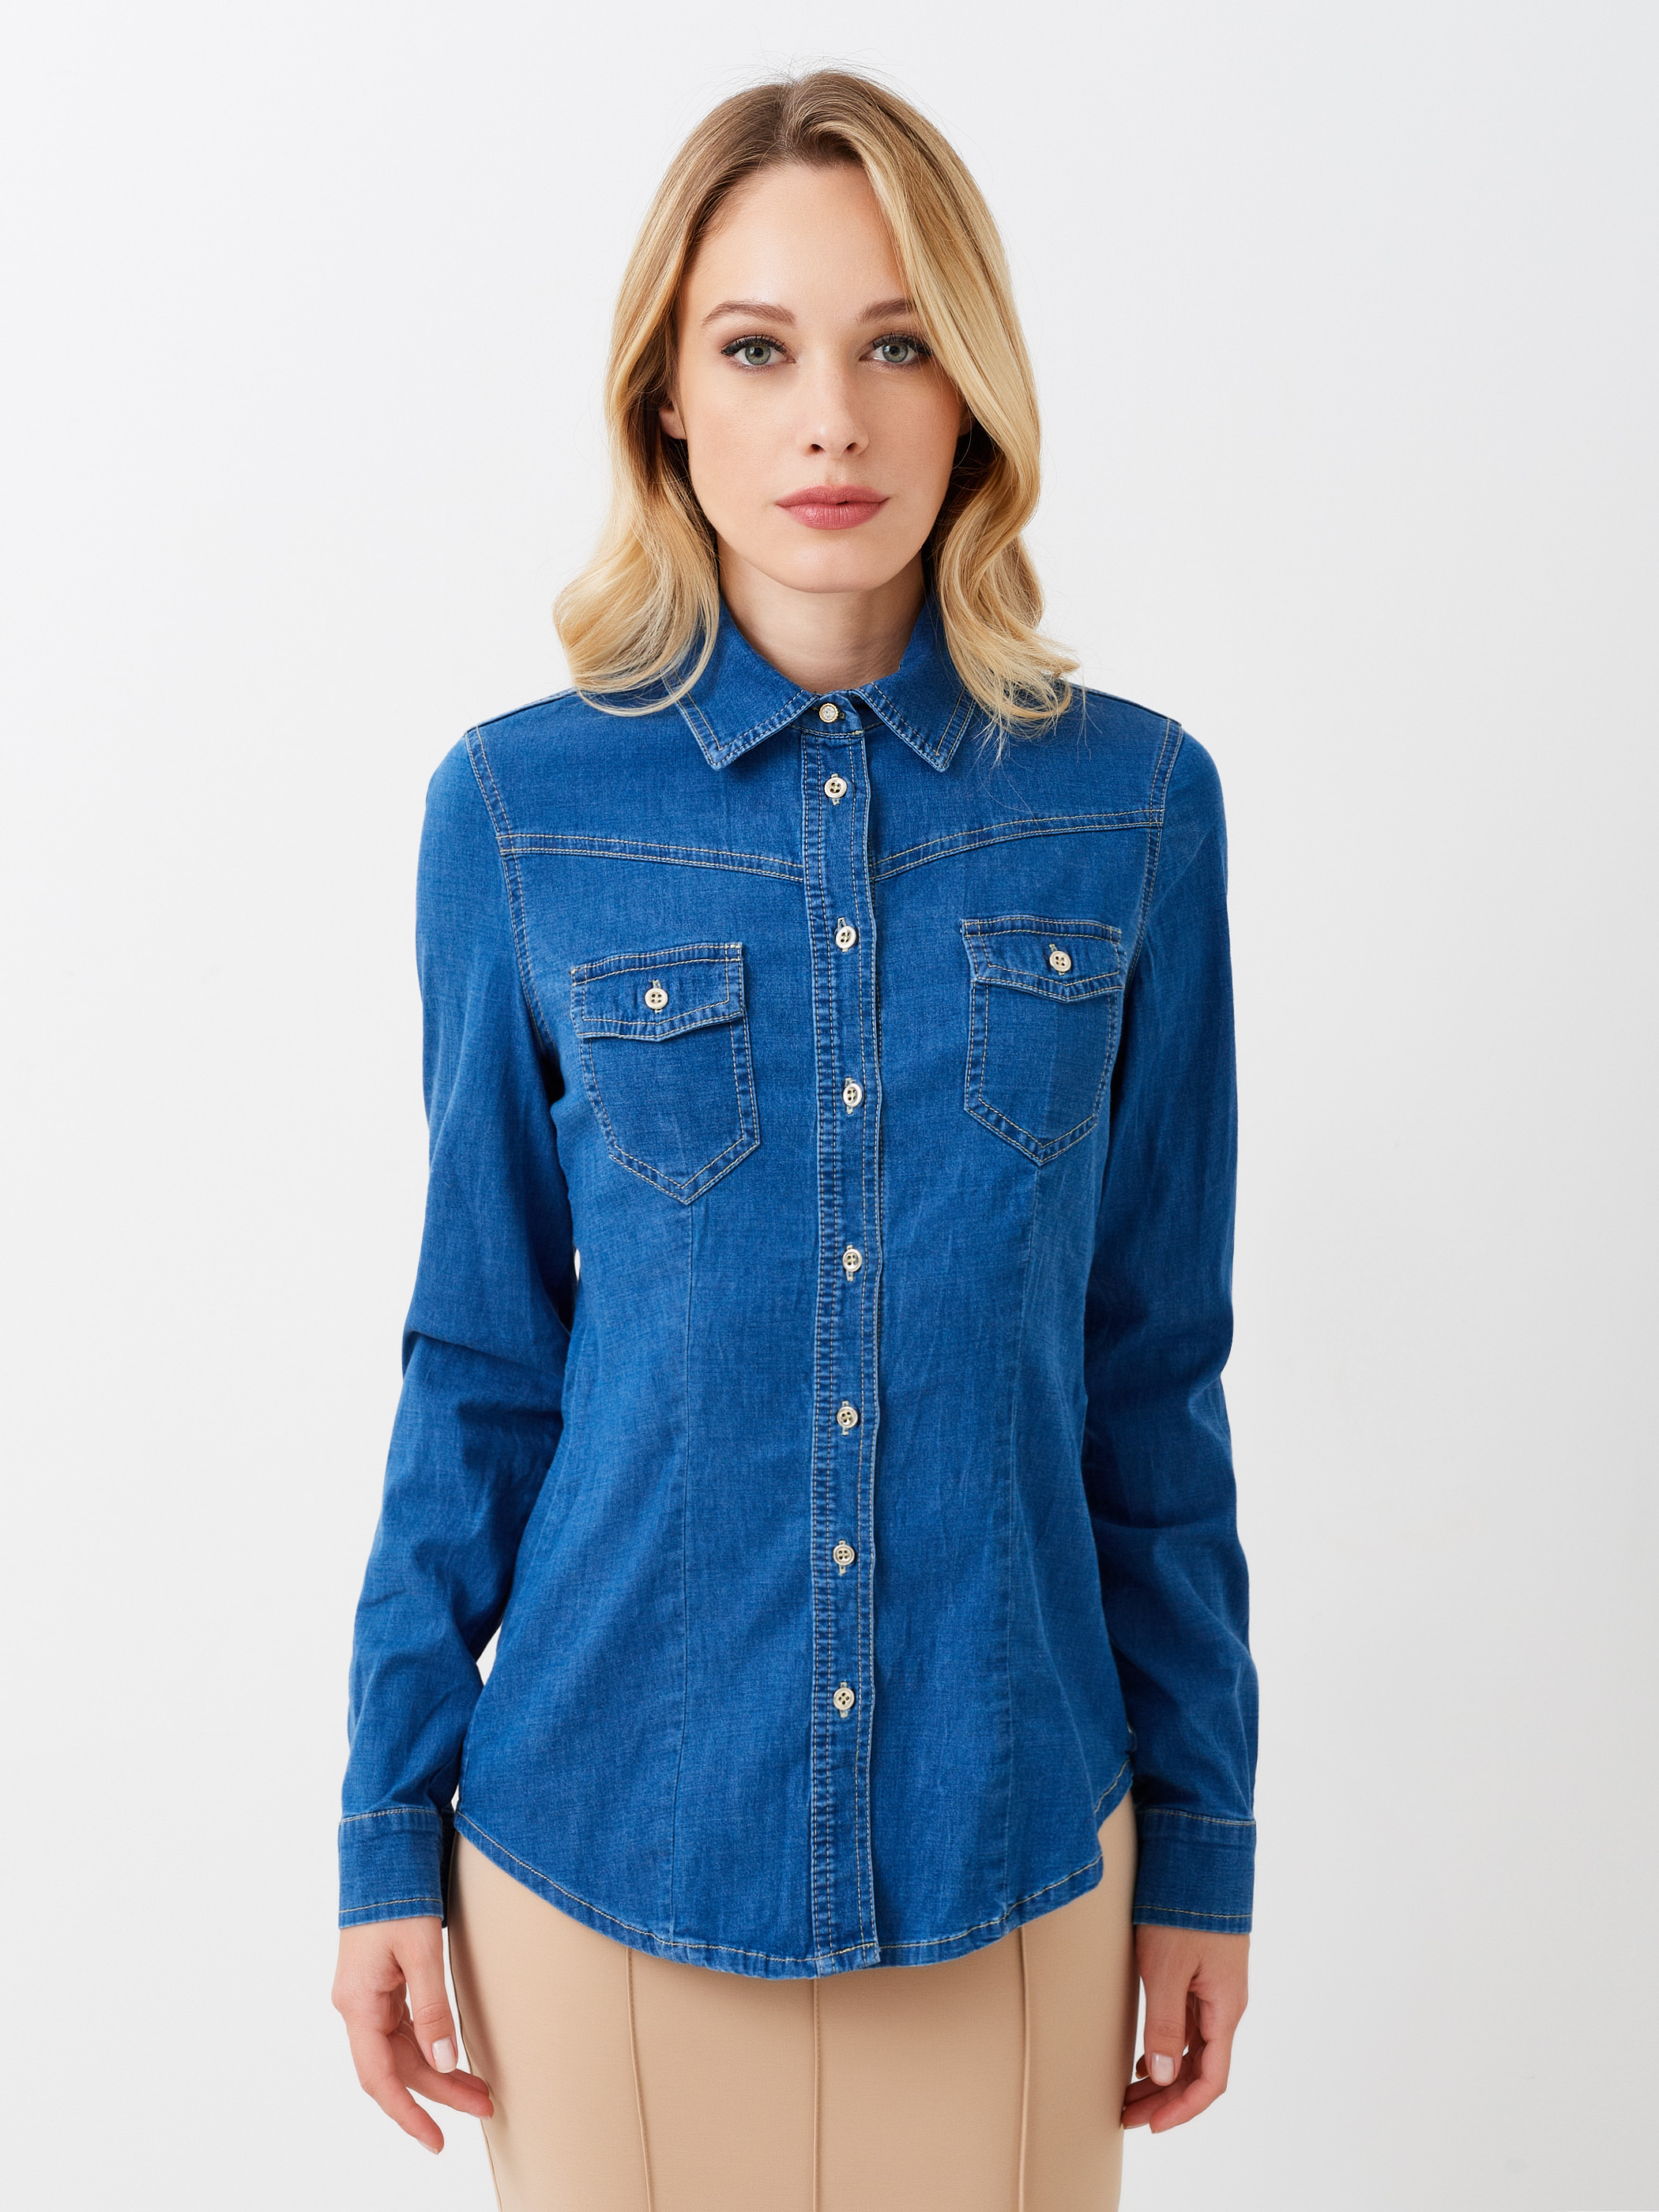 Blu Camicia denim aderente Farfetch Donna Abbigliamento Camicie Camicie denim 